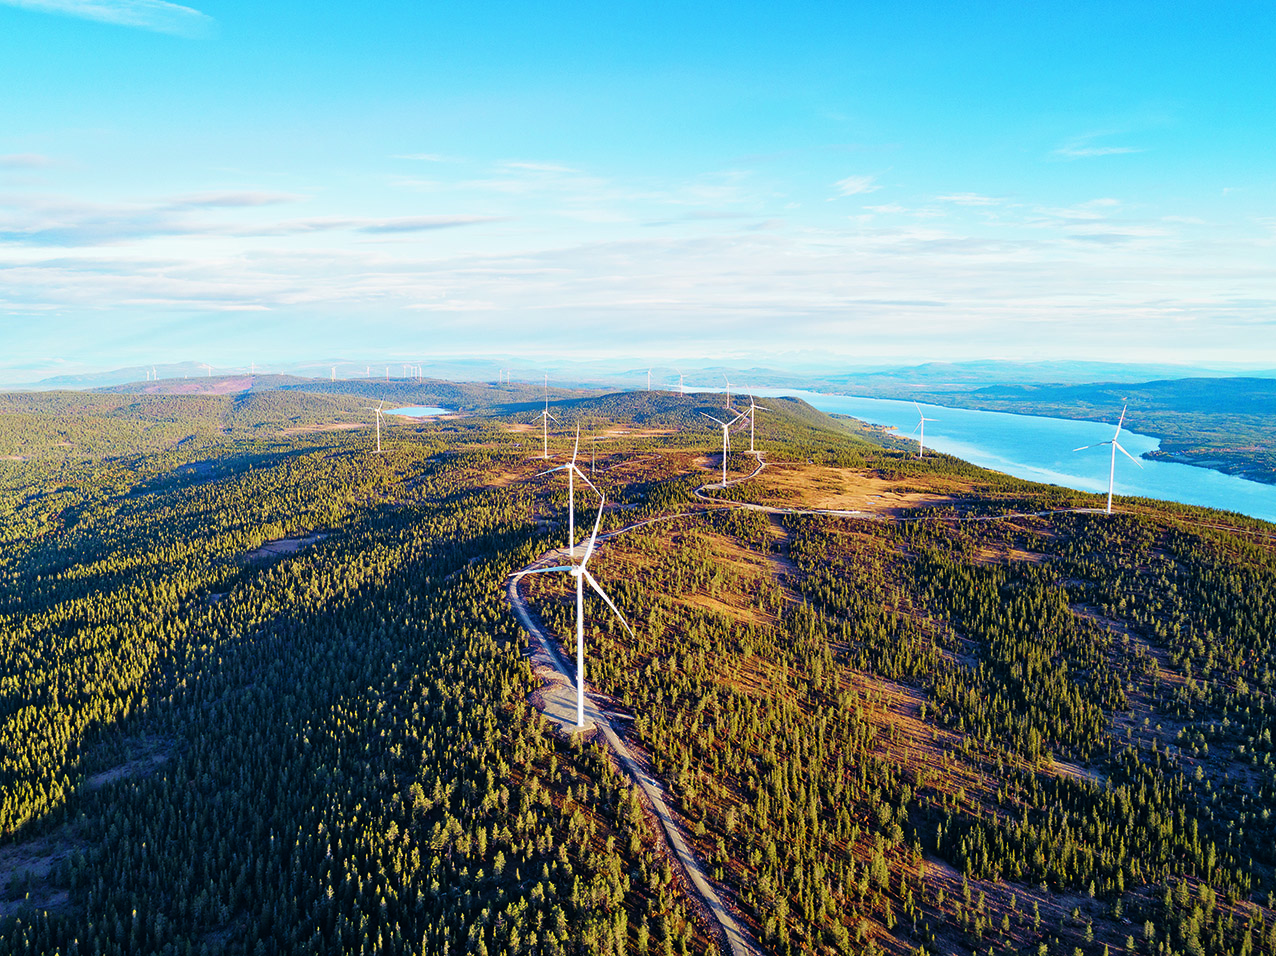 Raskiftet wind farm (112 MW) in Norway. Photo: Joakim Lagercrantz